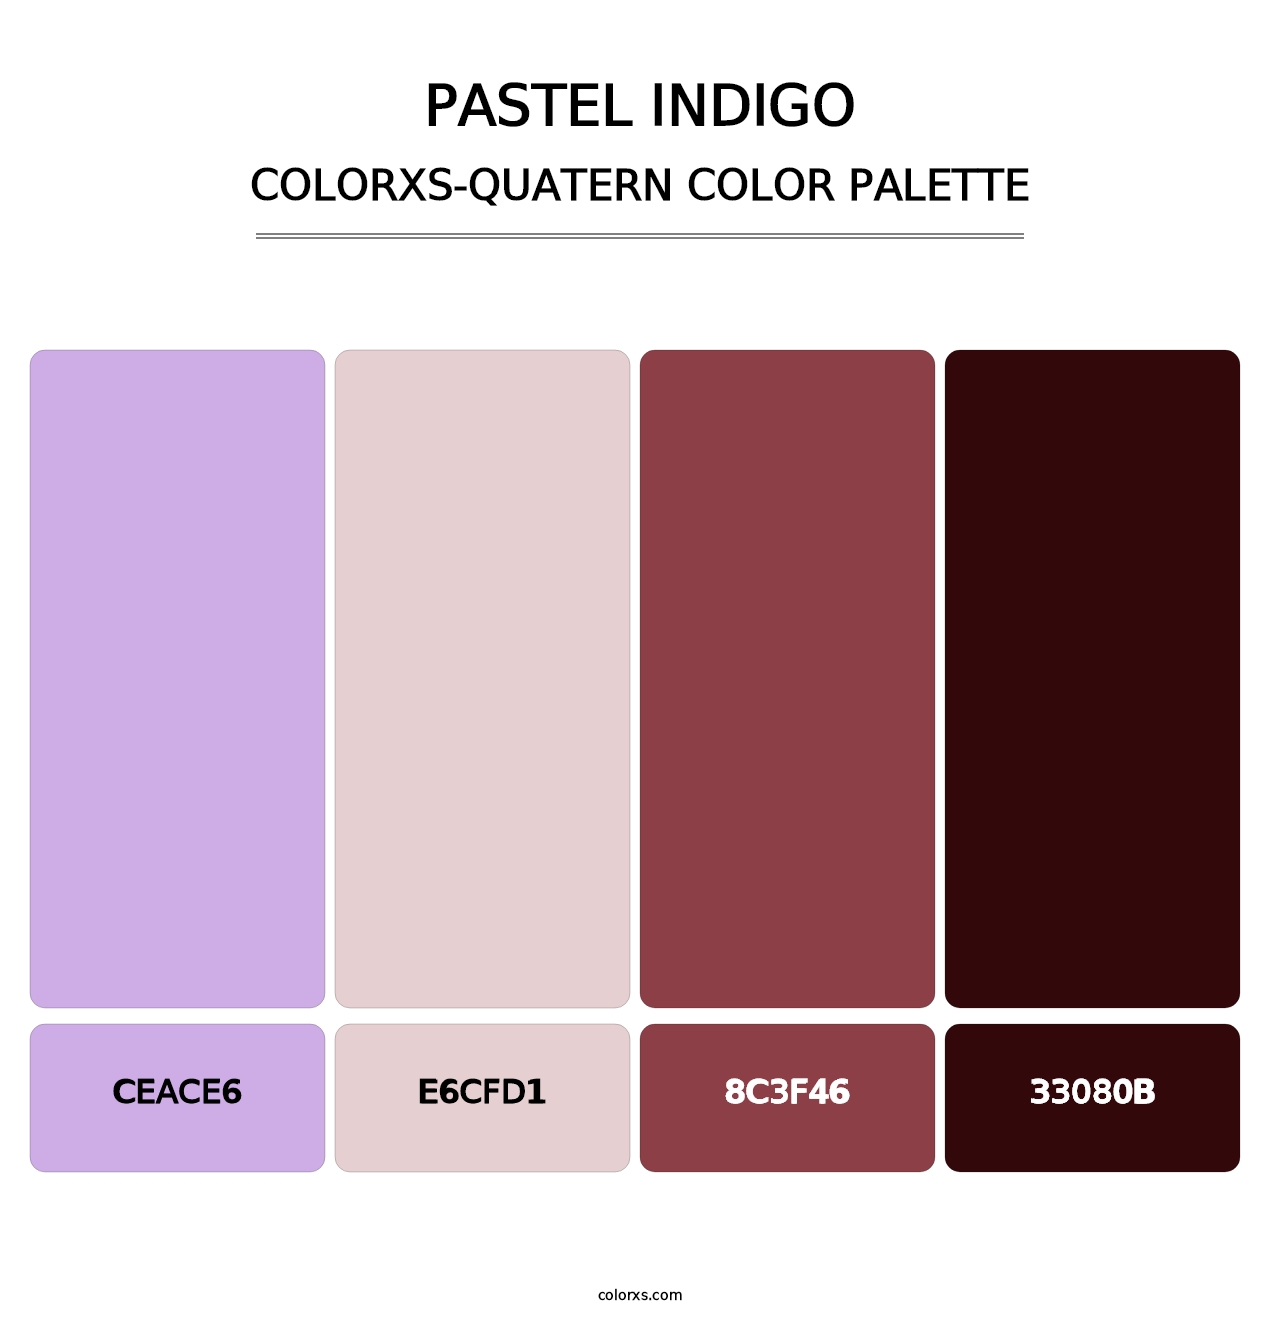 Pastel Indigo - Colorxs Quatern Palette